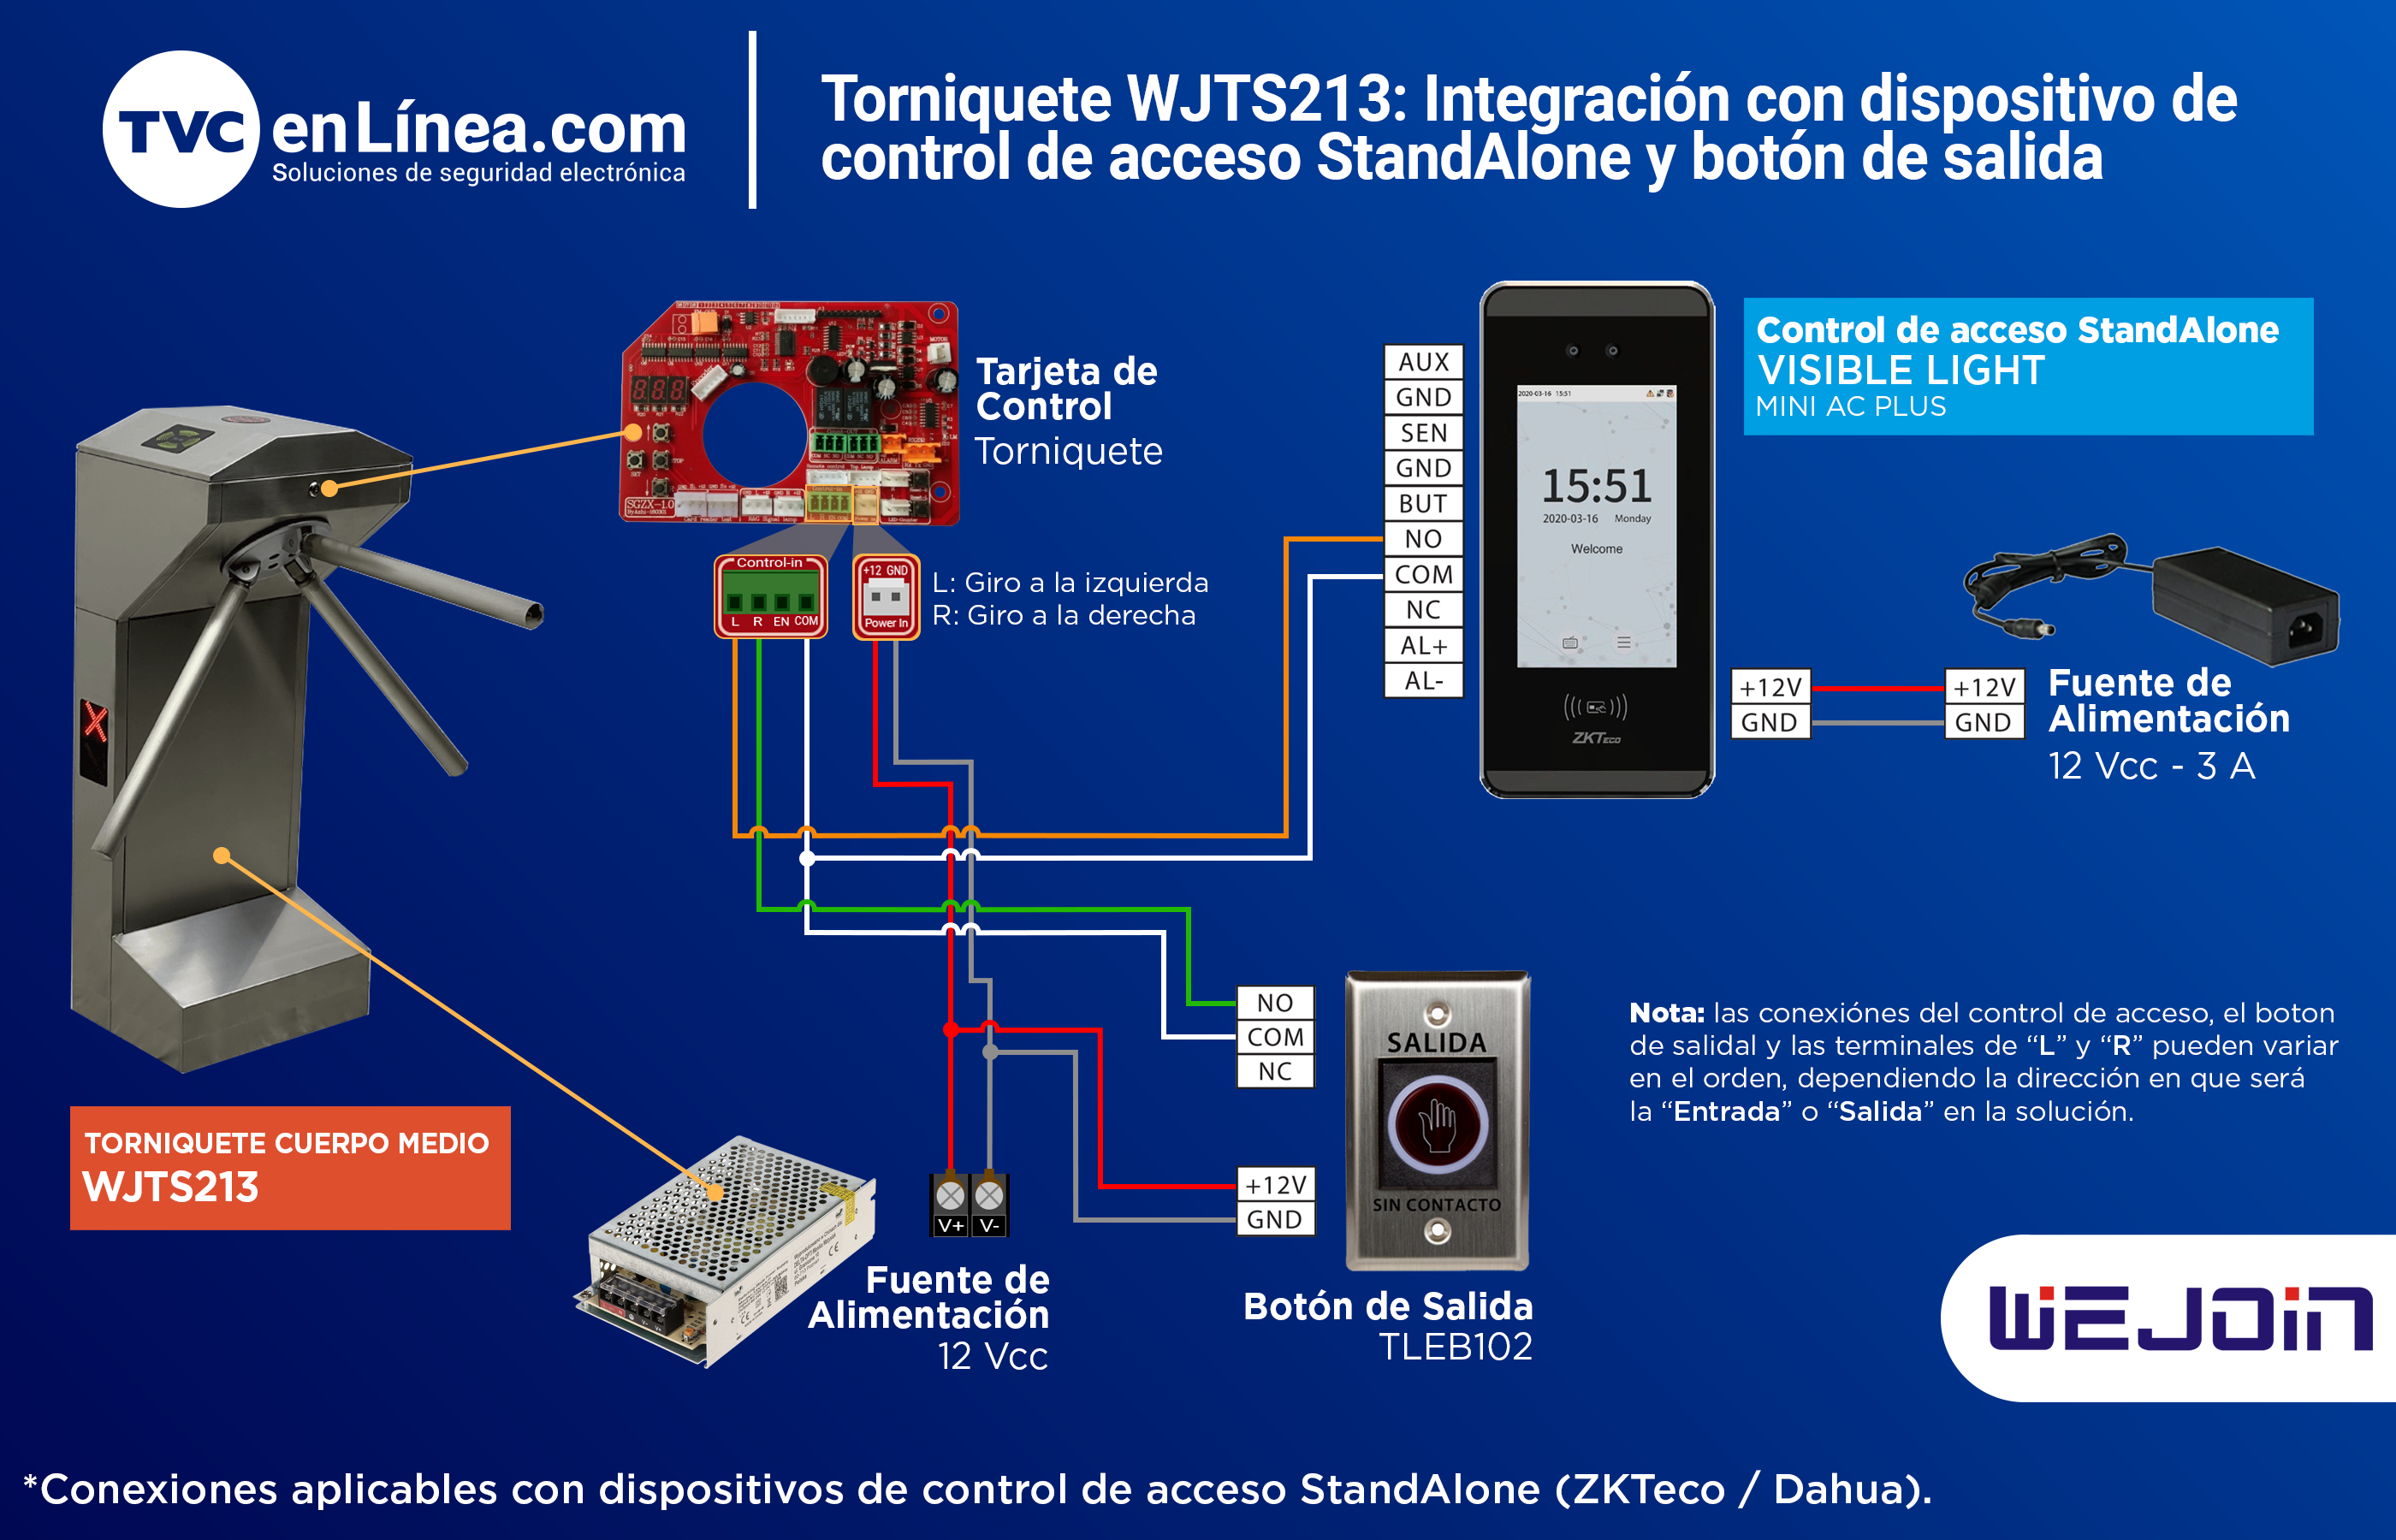 Torniquete WJTS213 control de acceso stand alone y boton de salida